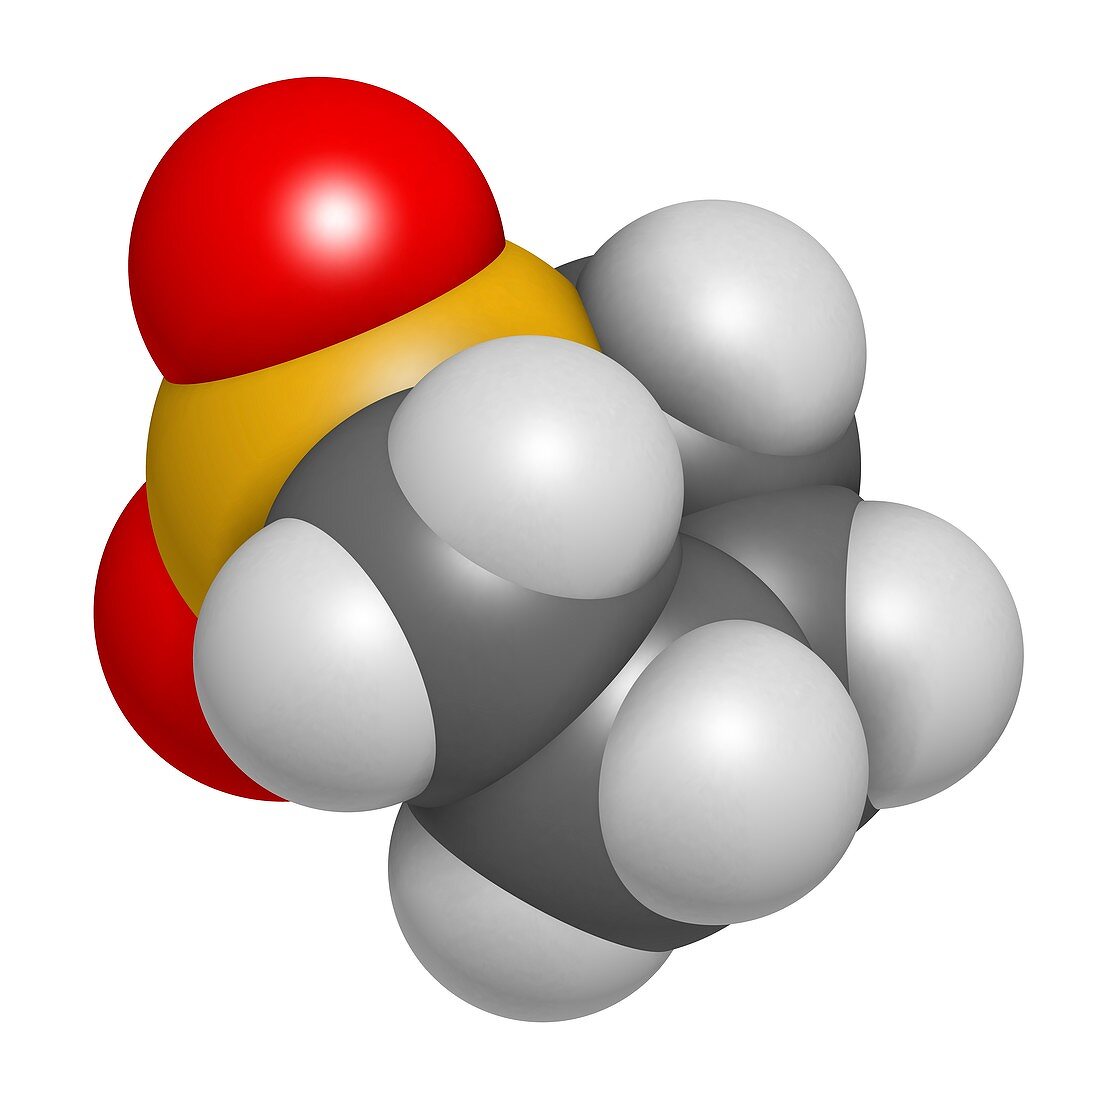 Sulfolane industrial solvent molecule